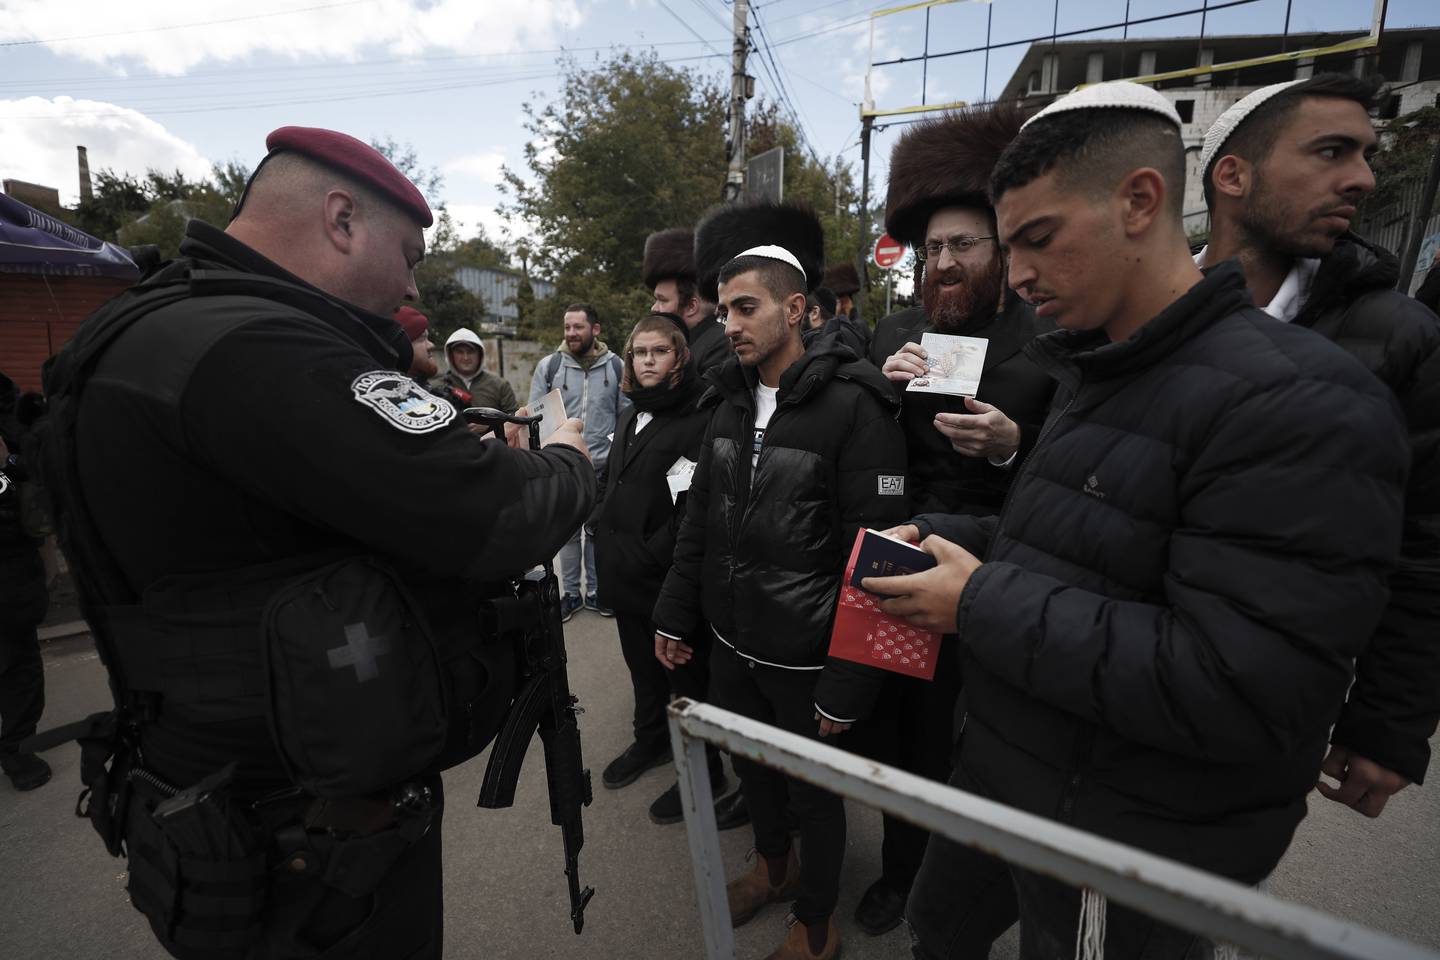 Orthodox Jews show IDs and passports to Ukrainian security guards. EPA